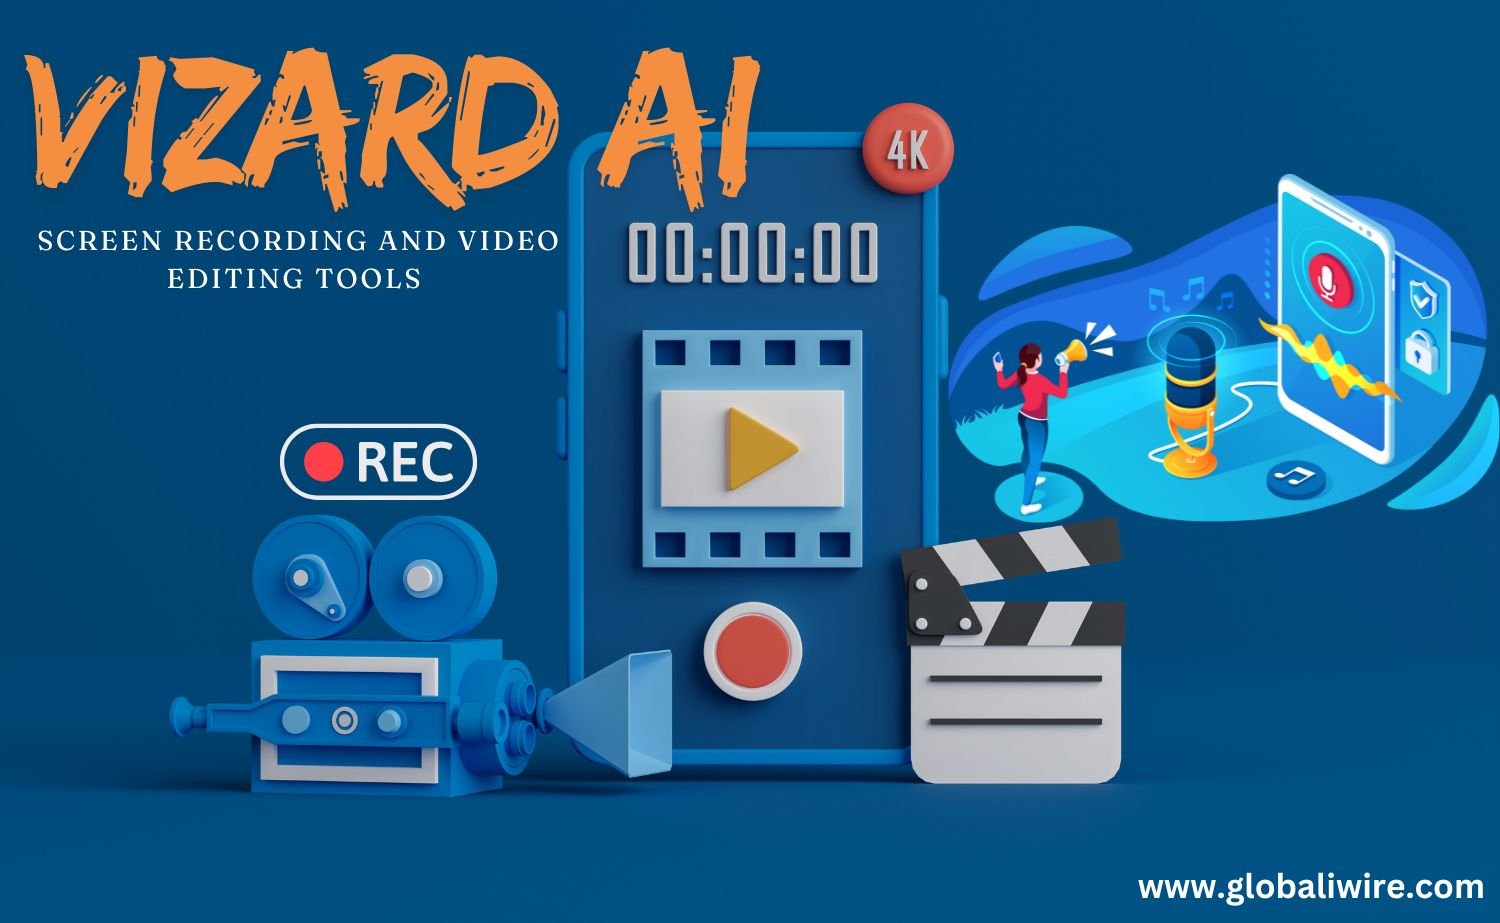 Vizard AI : Screen Recording and Video Editing Tools